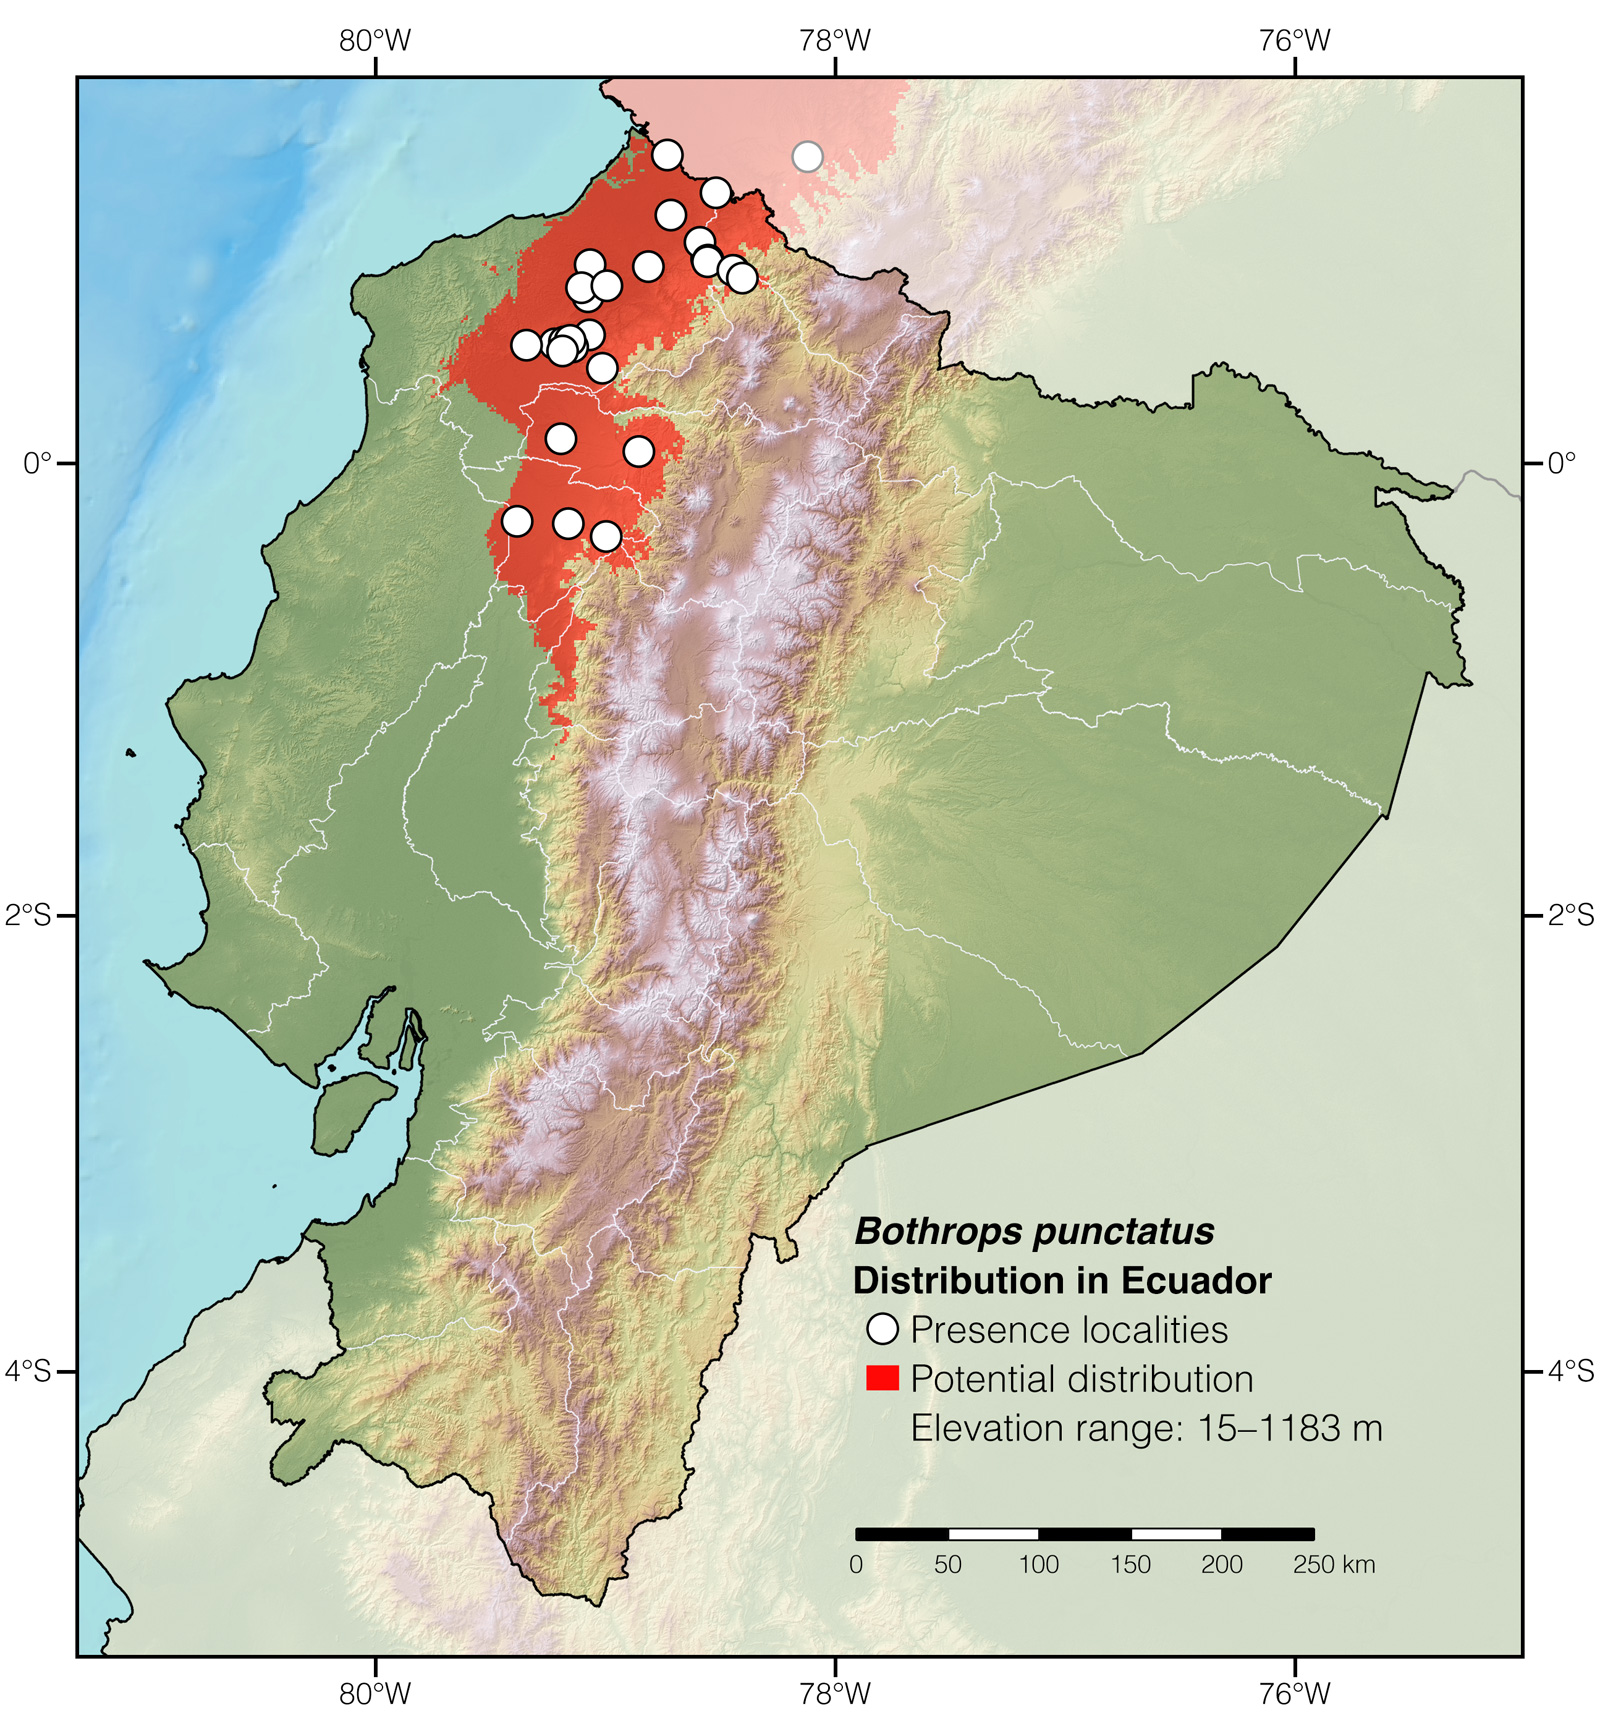 Distribution of Bothrops punctatus in Ecuador